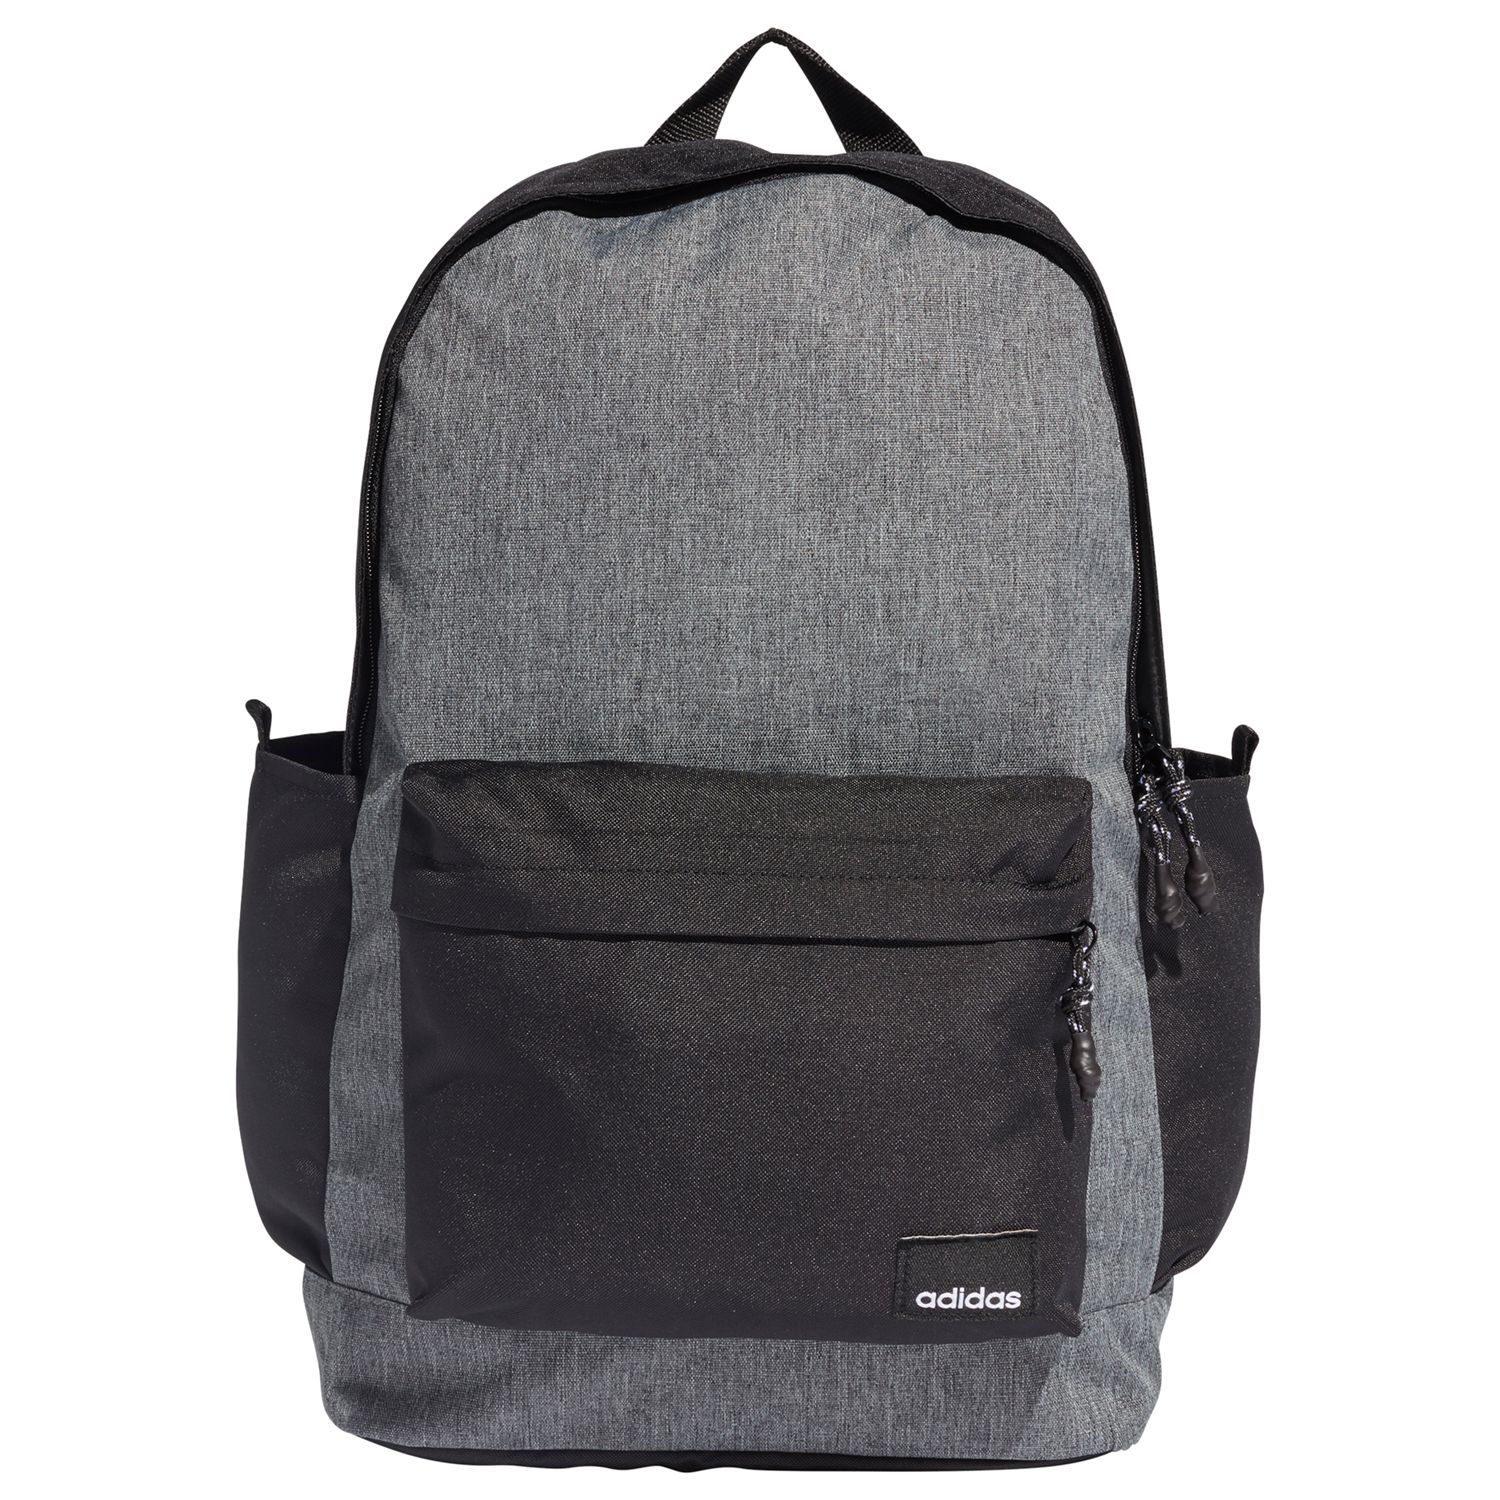 adidas black and grey backpack